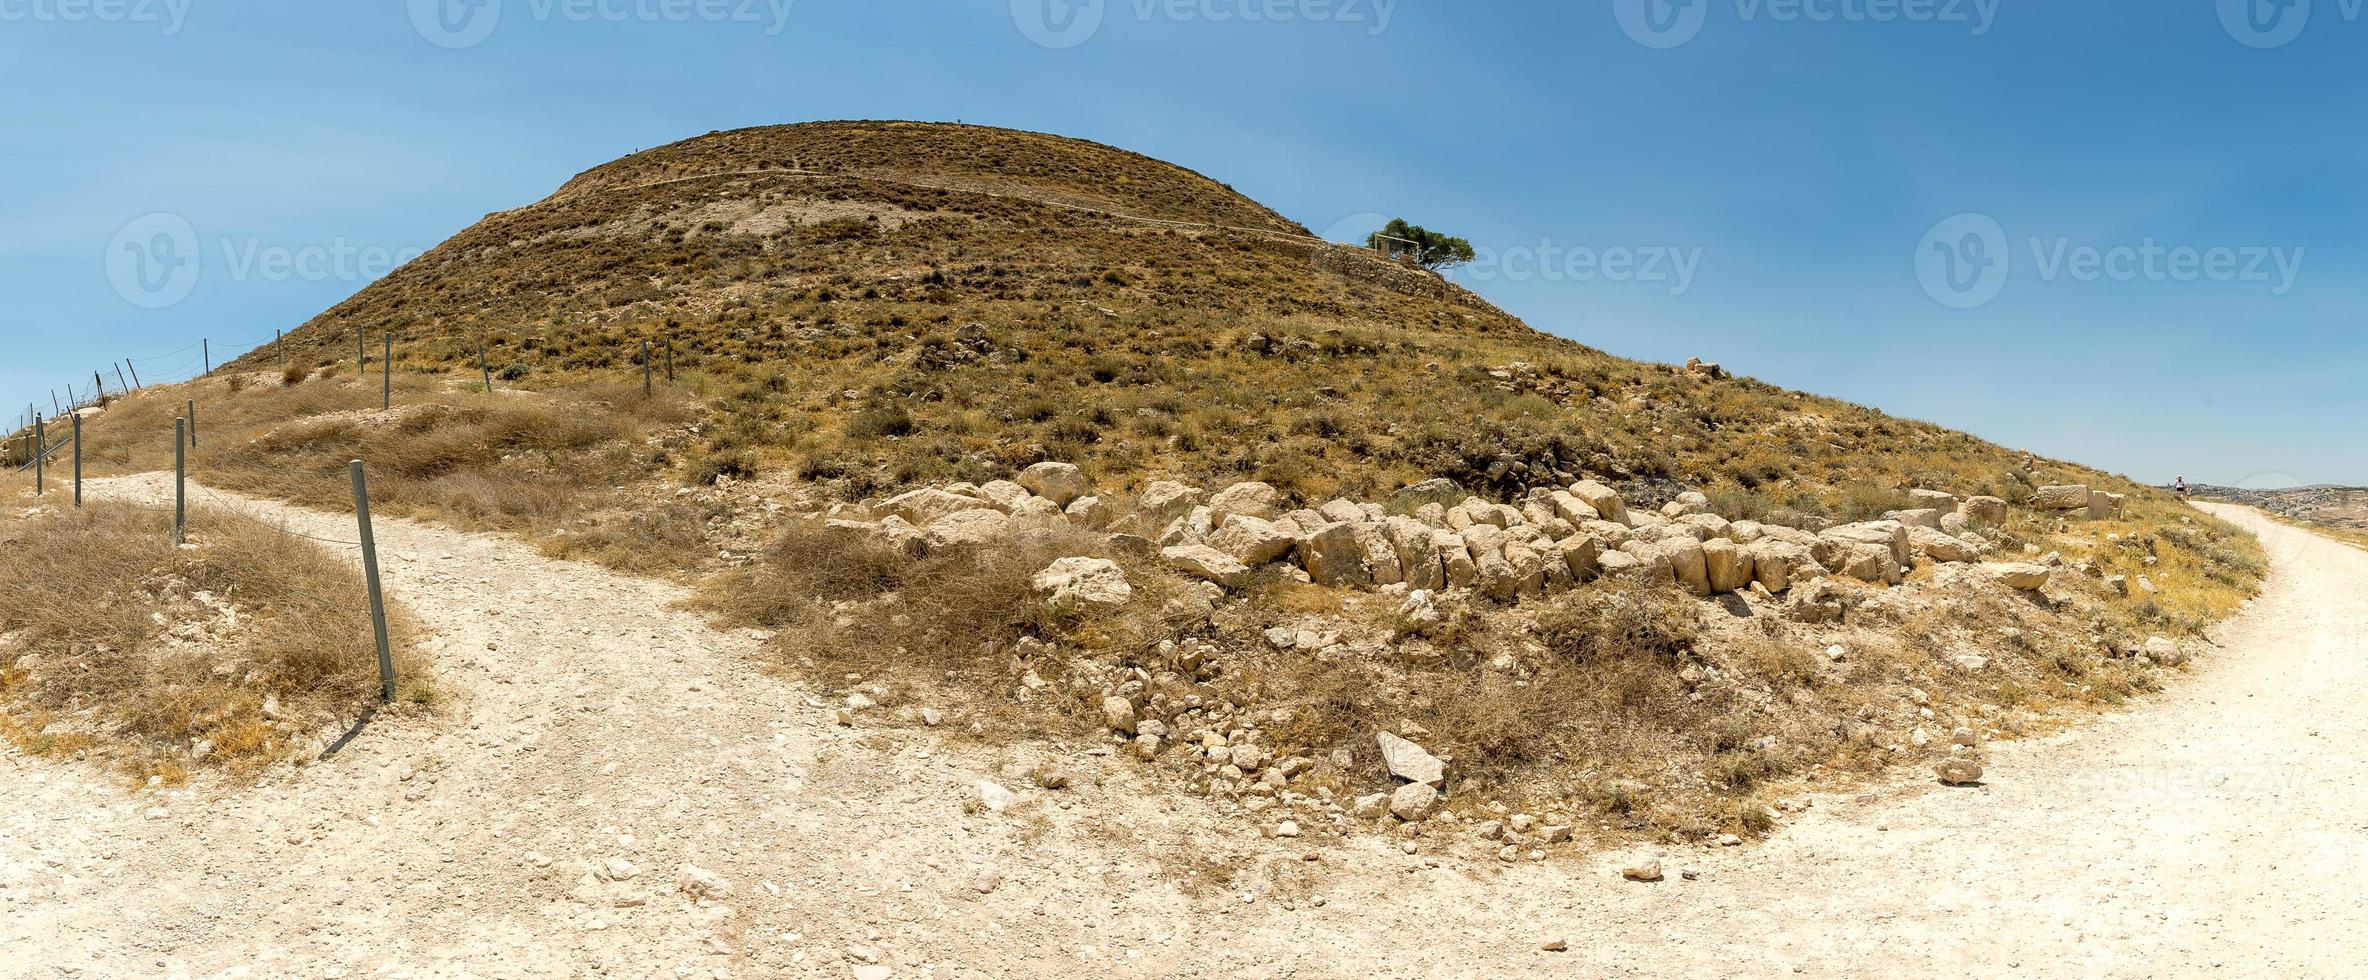 paisaje en israel foto